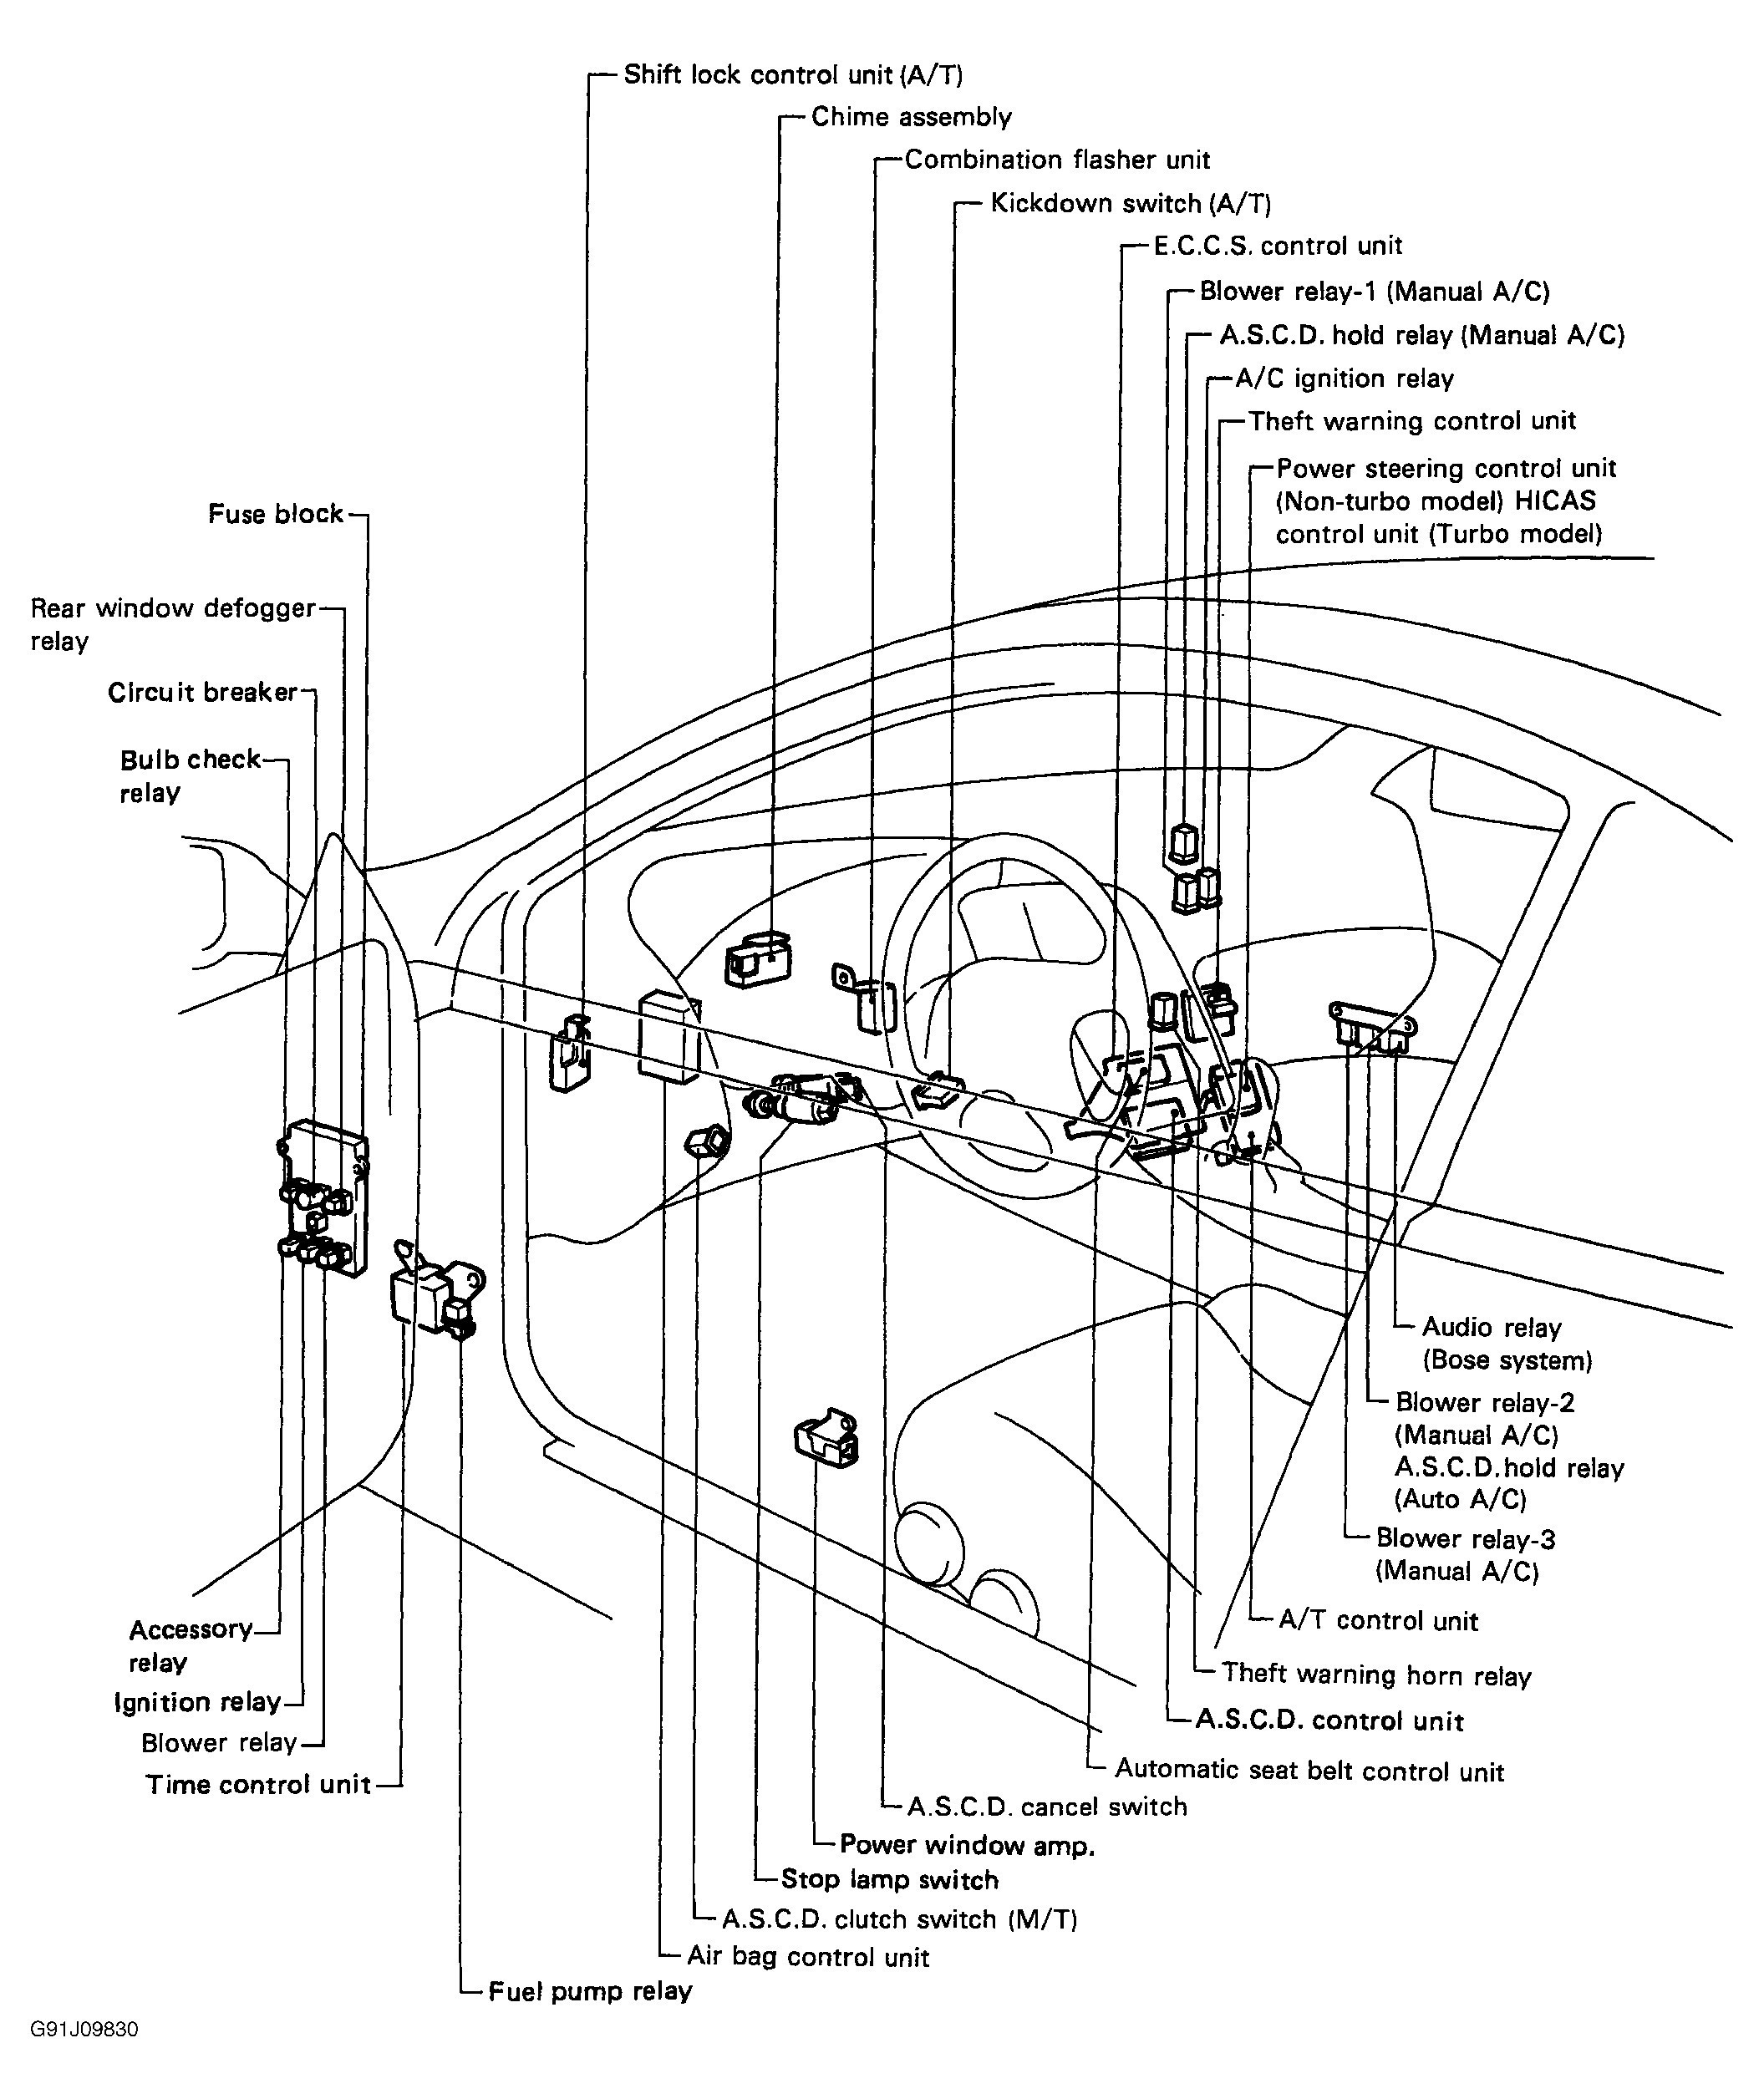 Nissan Hardbody Alternator Wiring Diagram